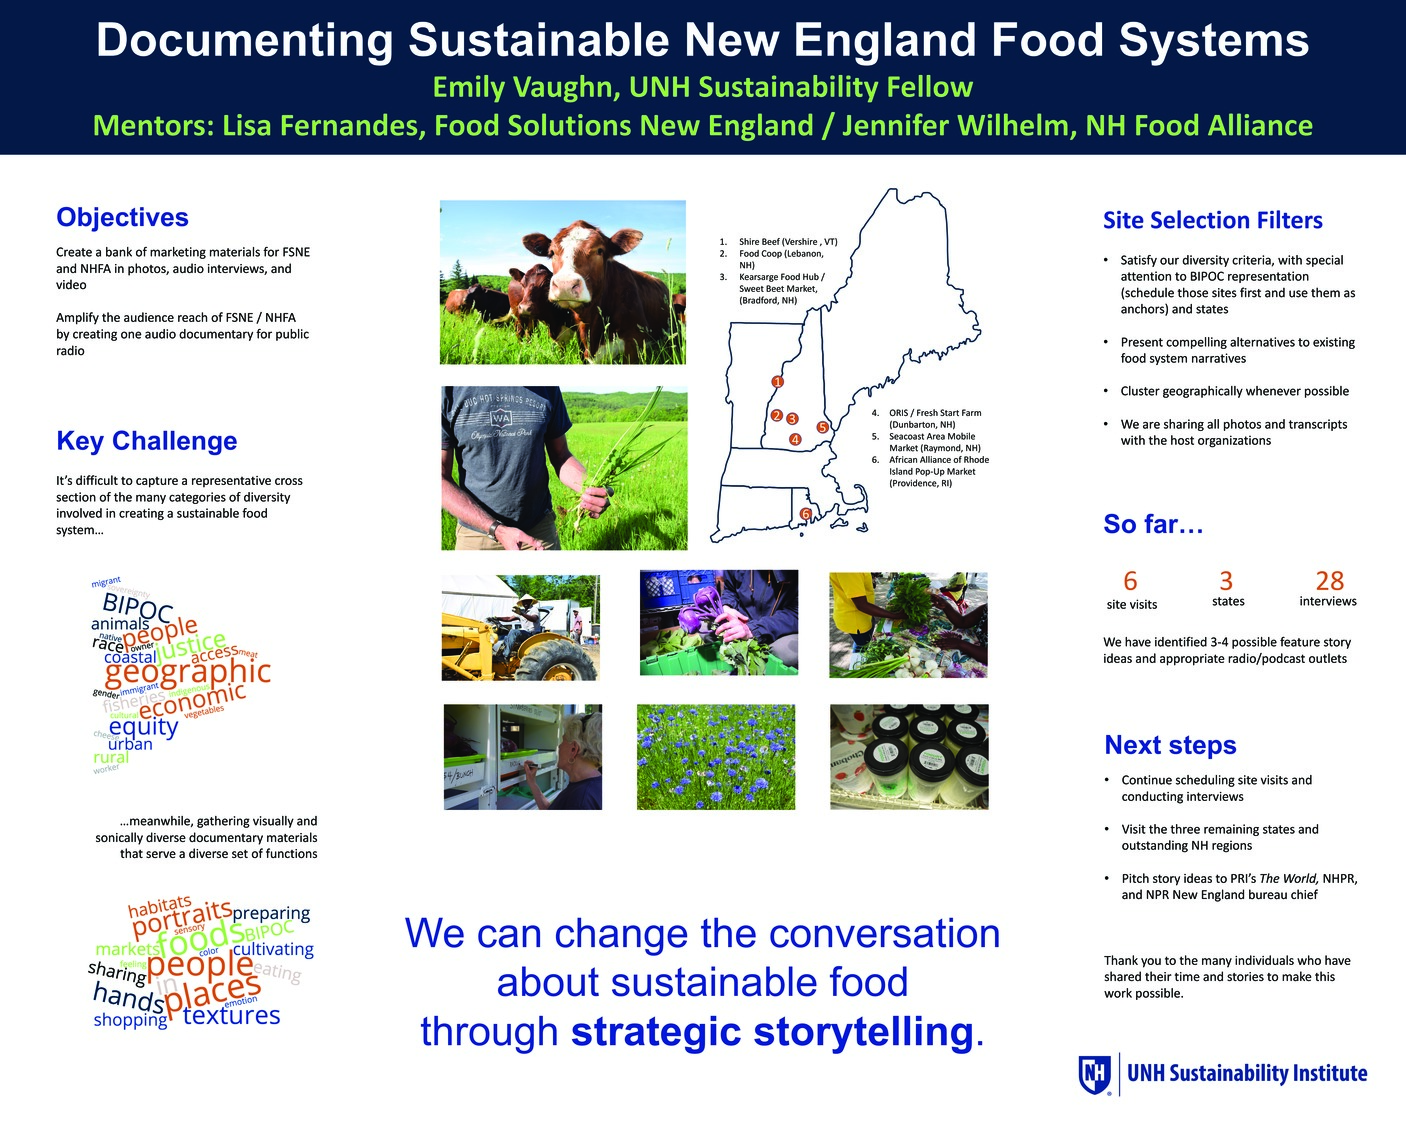 Documenting Food Systems_Vaughn by emilyvaughn